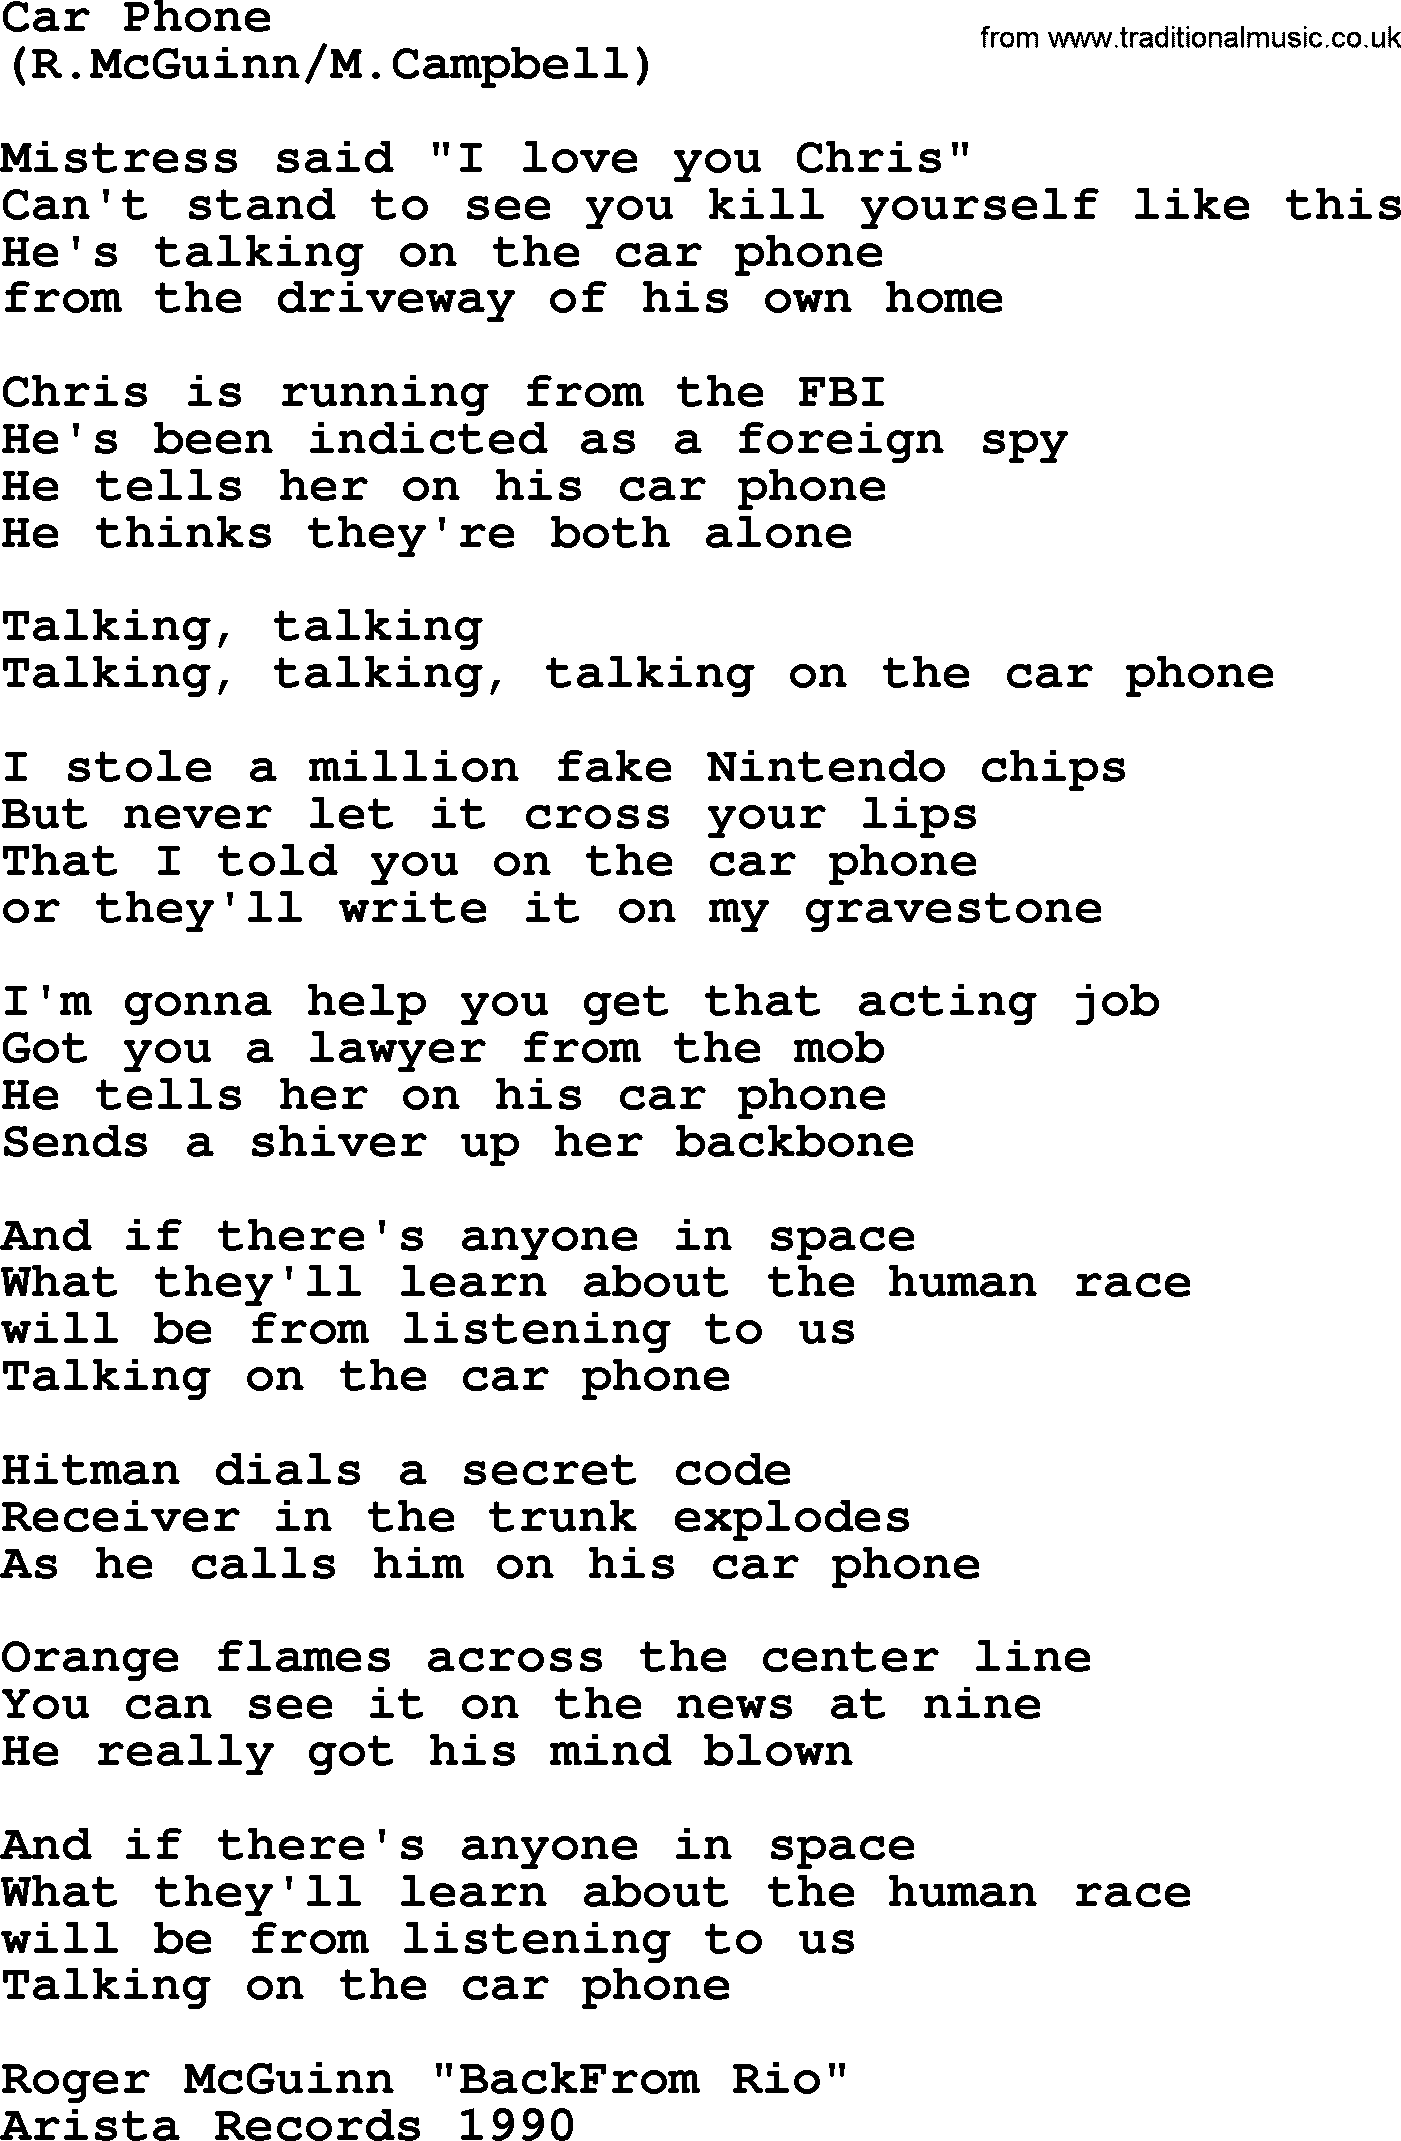 The Byrds song Car Phone, lyrics